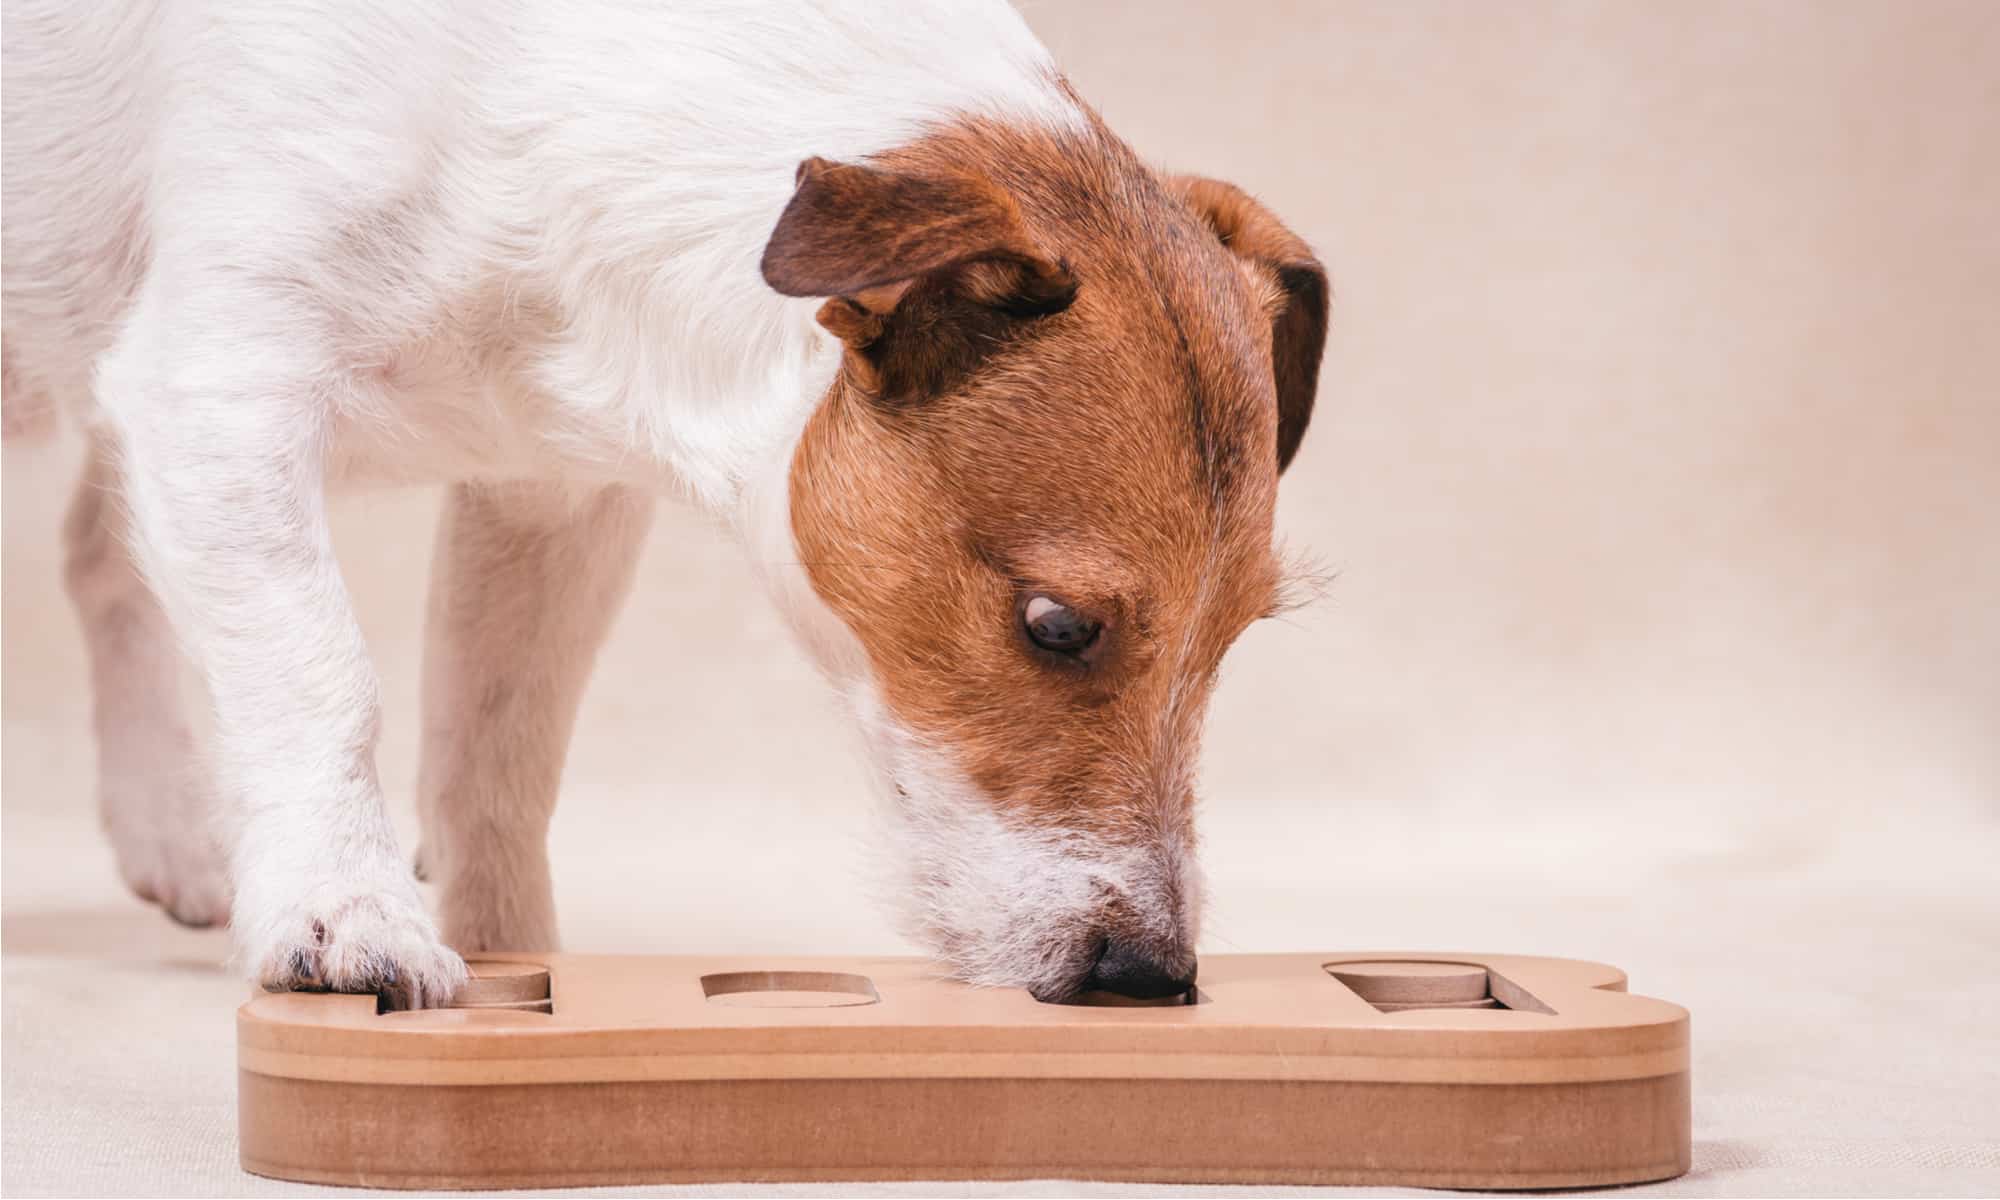 KADTC Dog Puzzle Toys for Medium/Large Dogs Slow Blow Puzzles